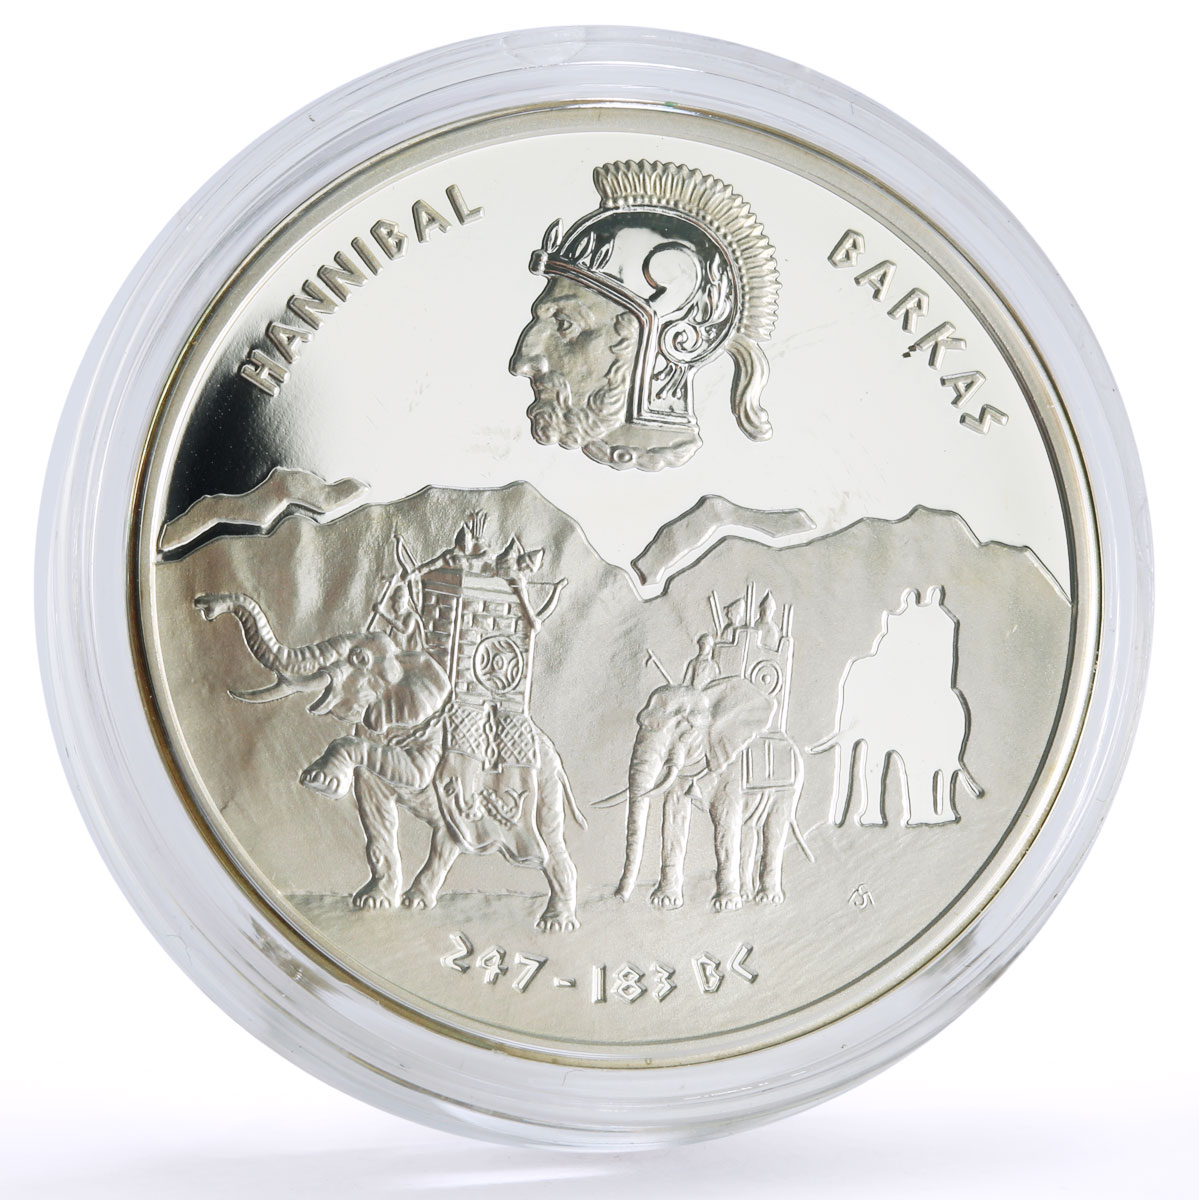 Niue 1 dollar Great Commanders Hannibal Barkas Elephants proof silver coin 2012